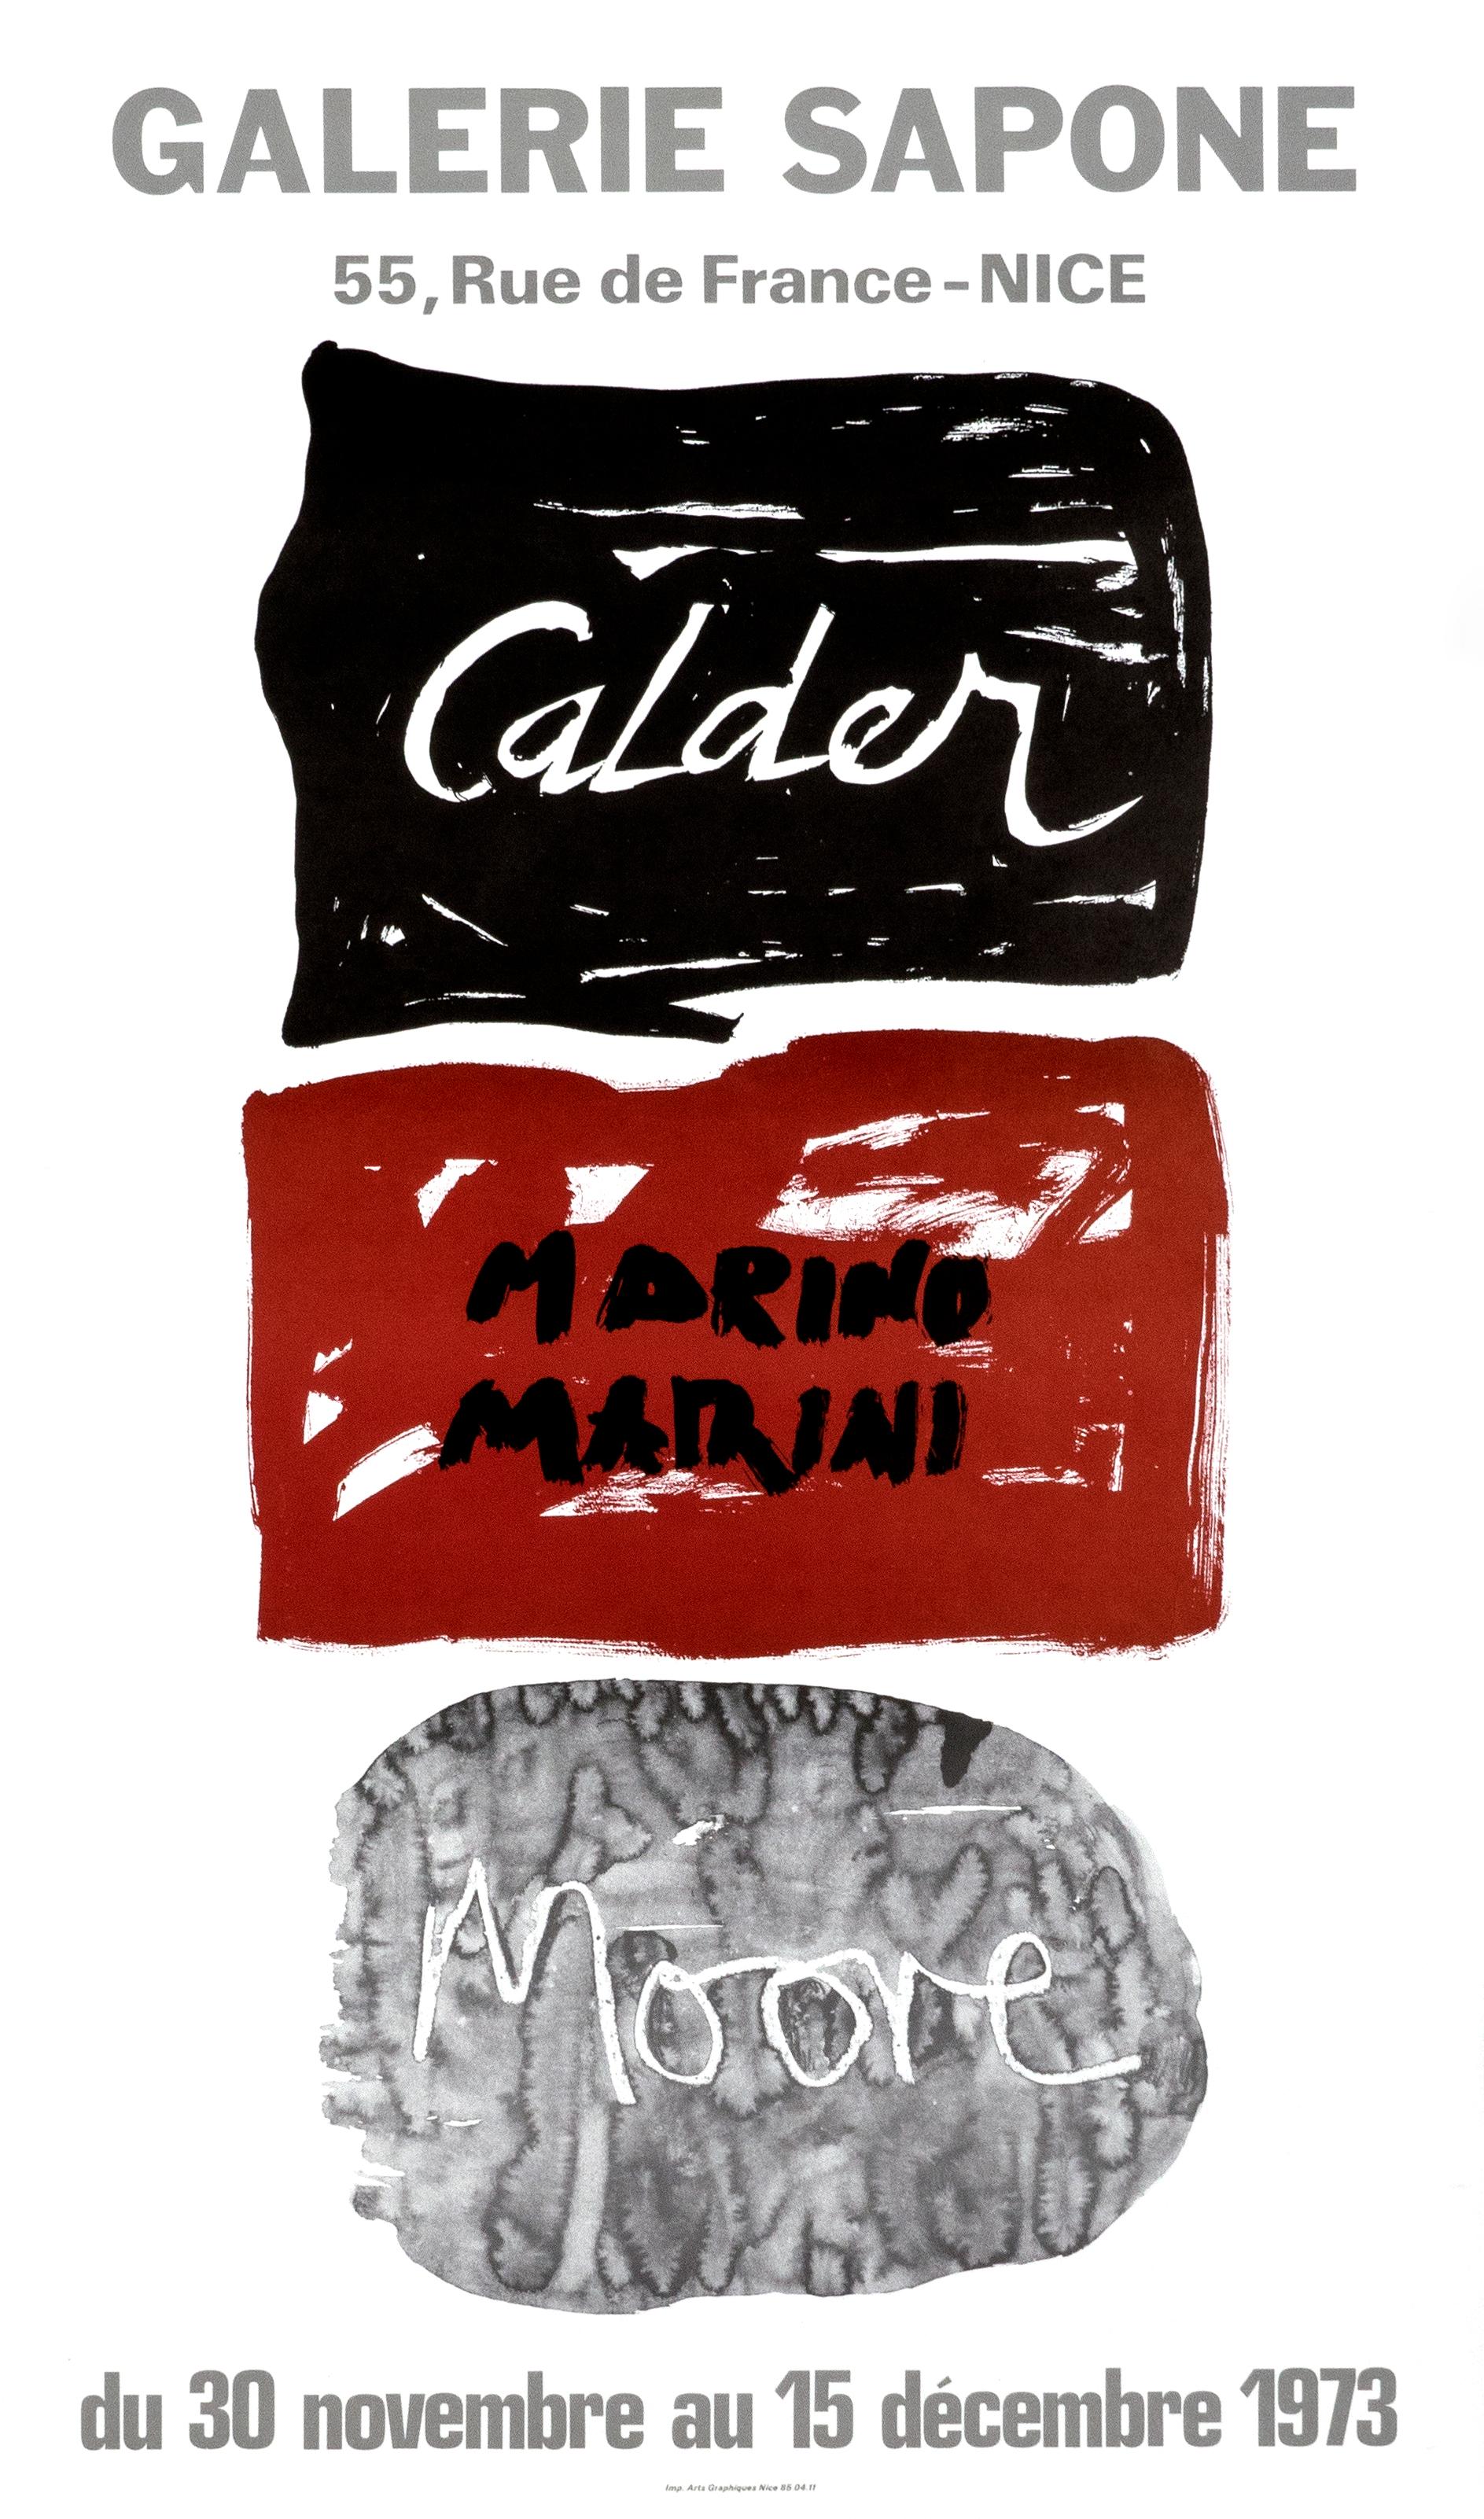 Alexander Calder Abstract Print - "Calder - Marini - Moore at Galerie Sapone" Original Art Exhibition Poster 1970s